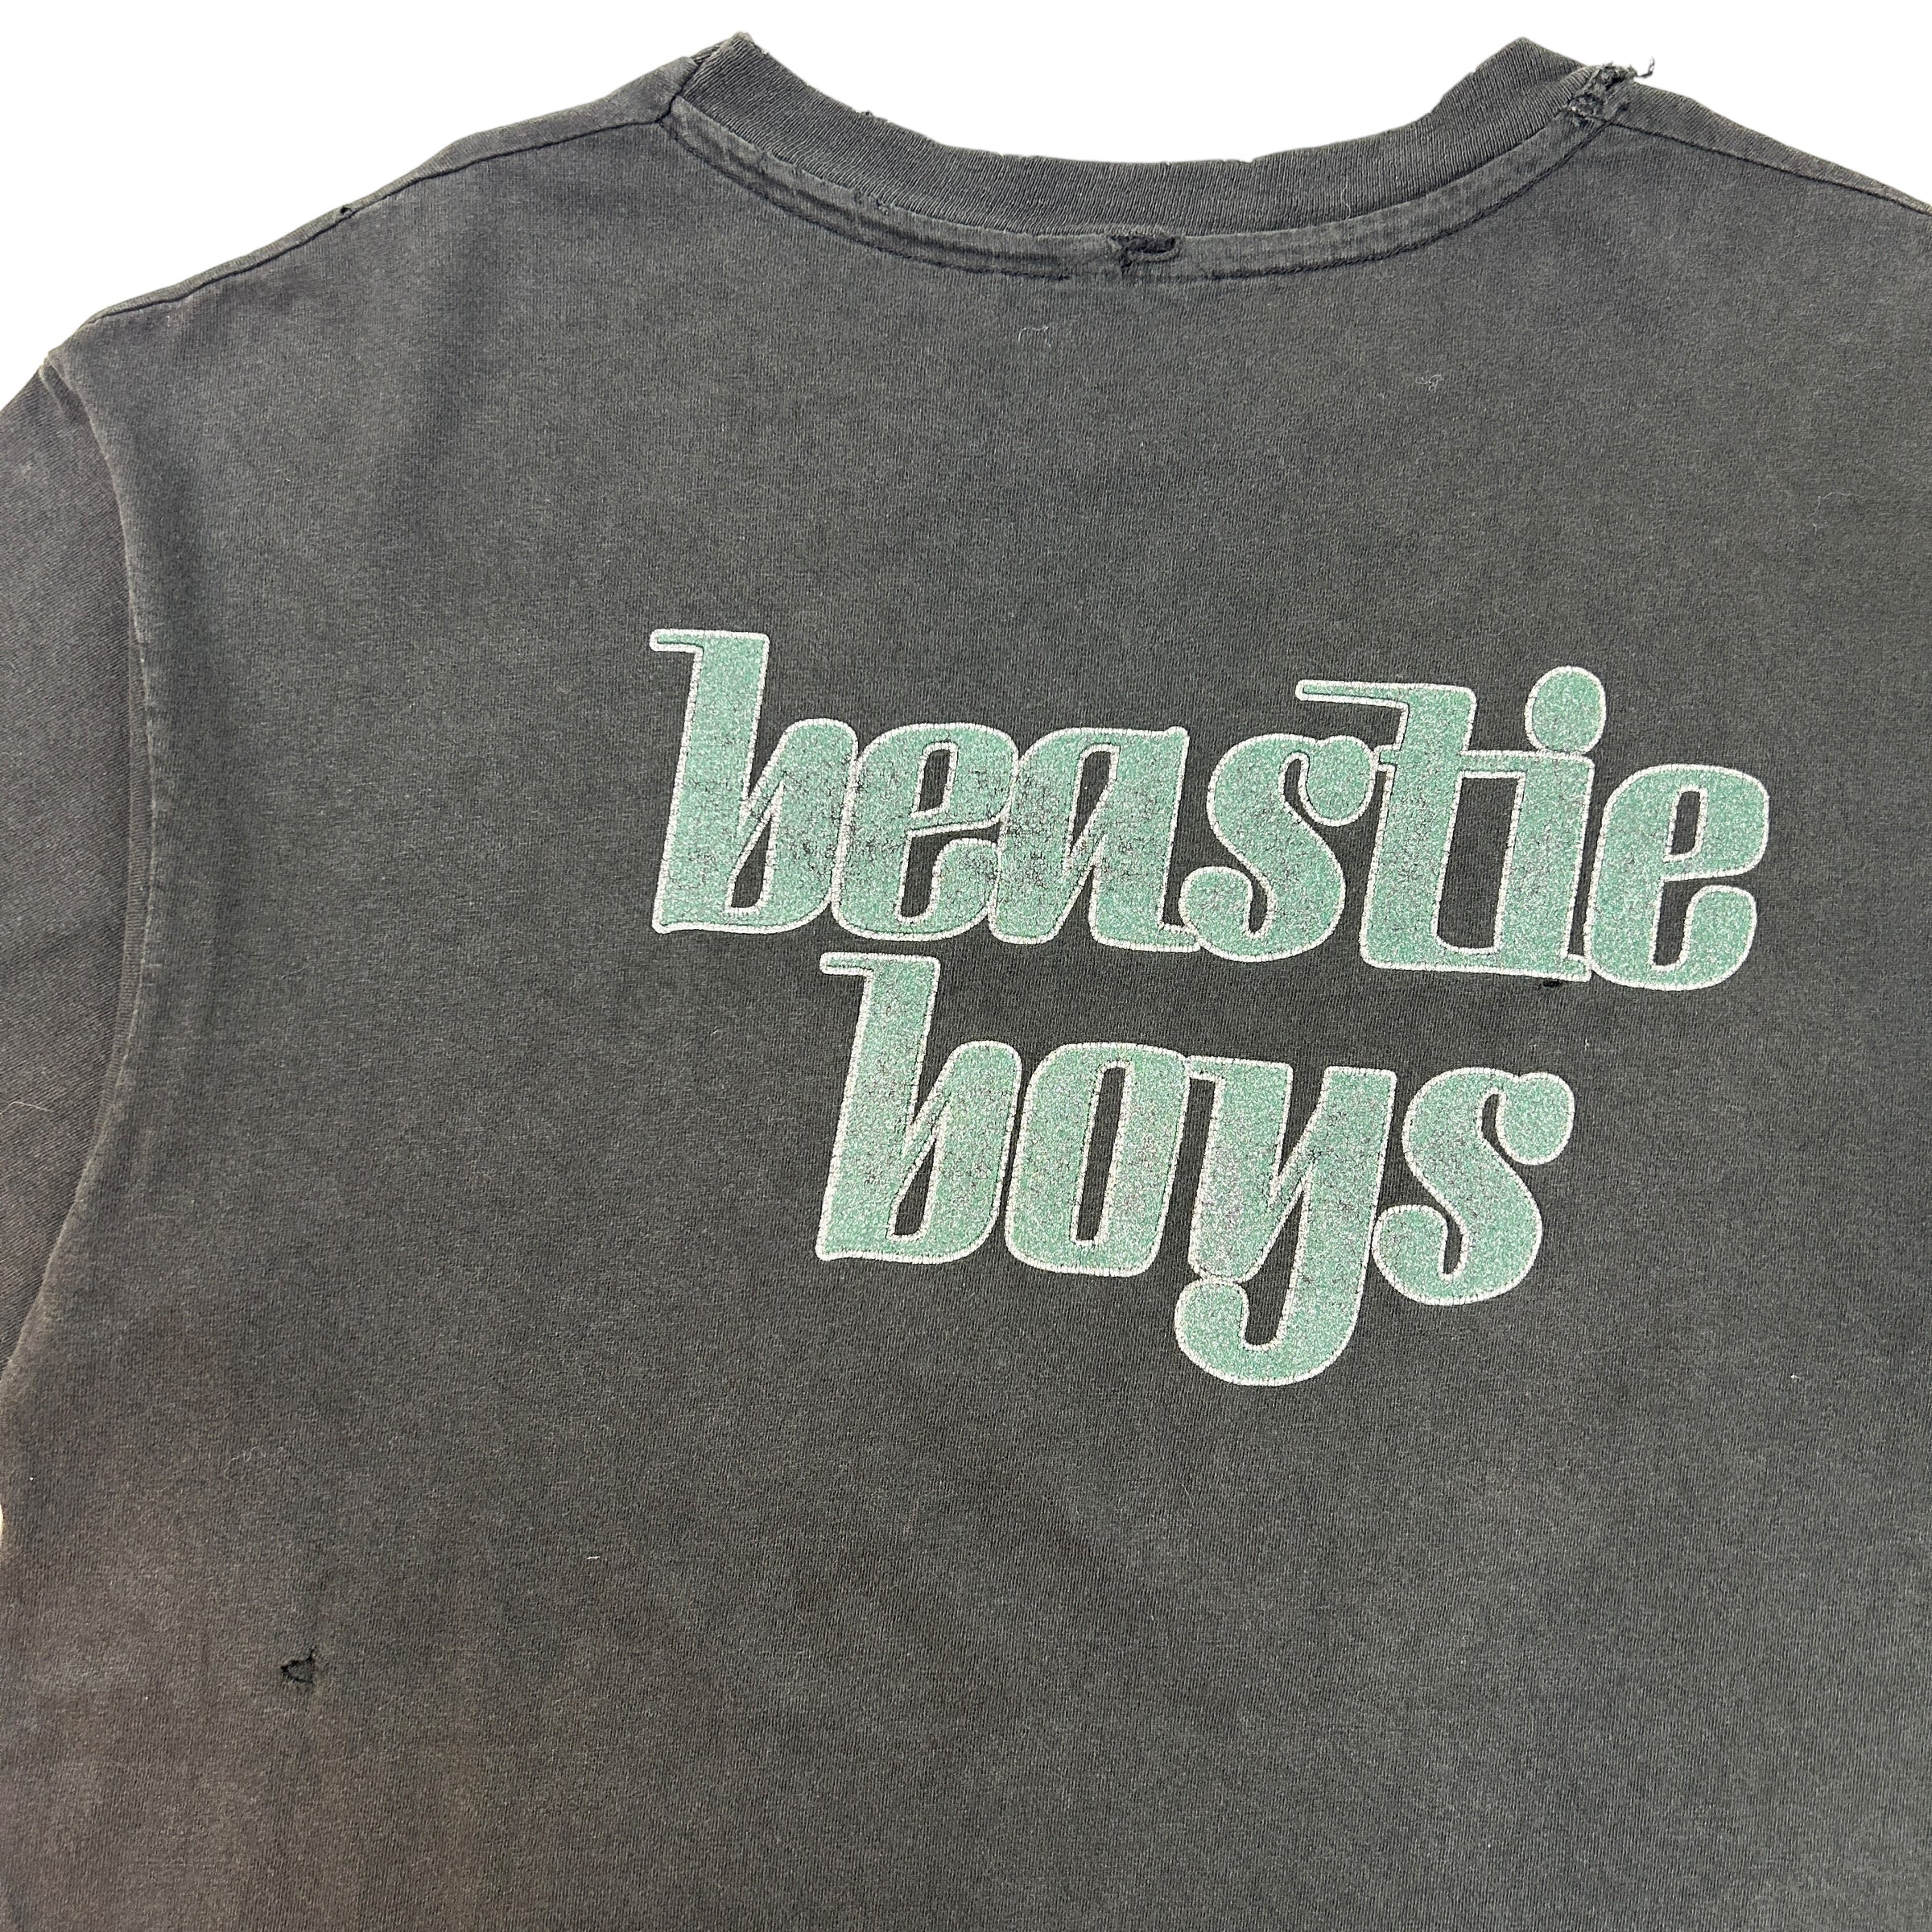 90s Beastie Boys Band Tee Black